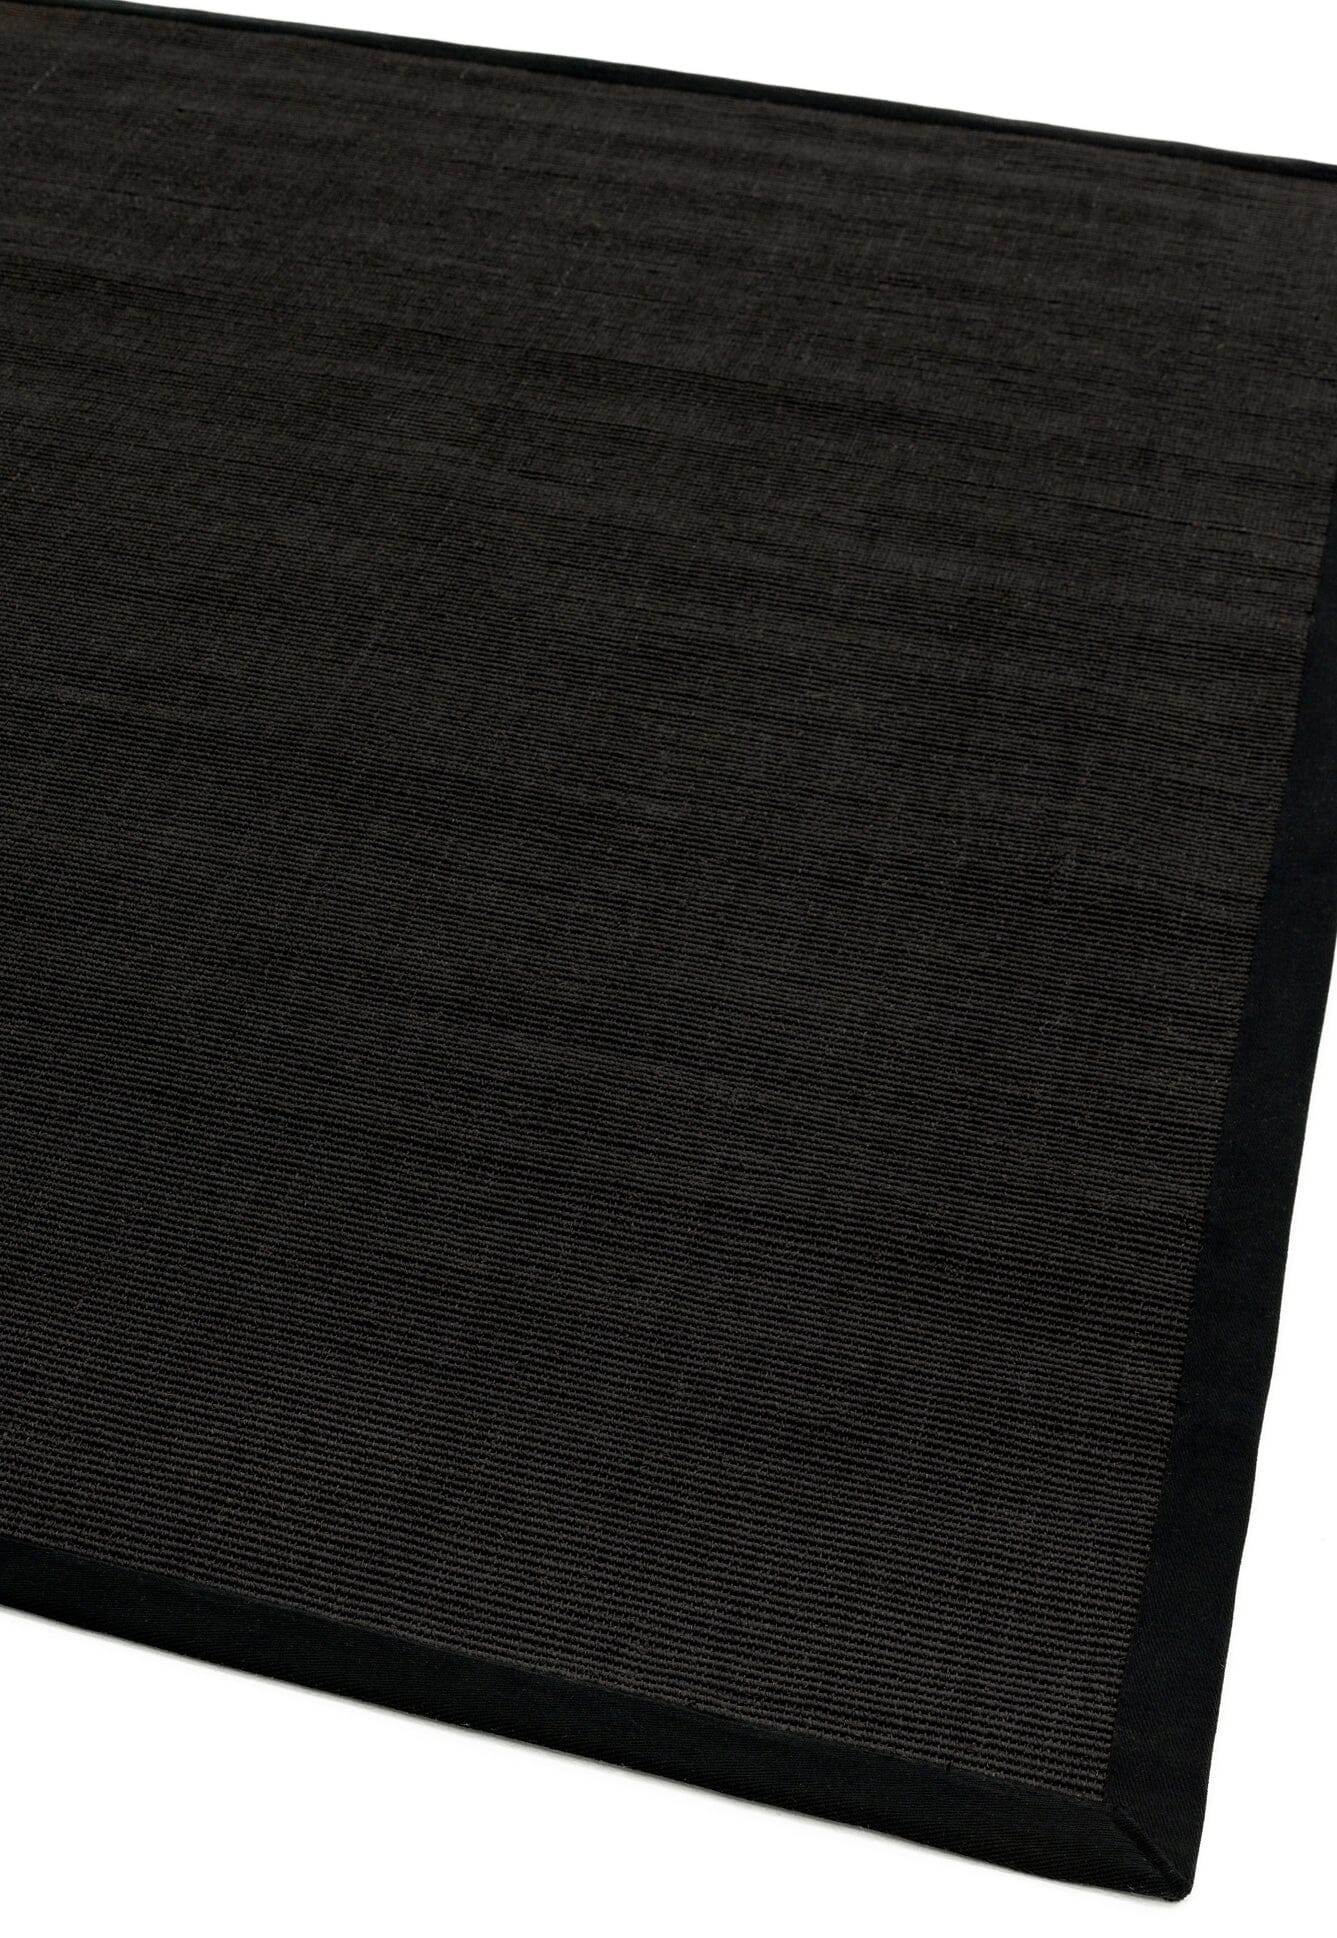  Asiatic Carpets-Asiatic Carpets Sisal Machine Woven Rug Black/Black - 68 x 300cm-Black 973 